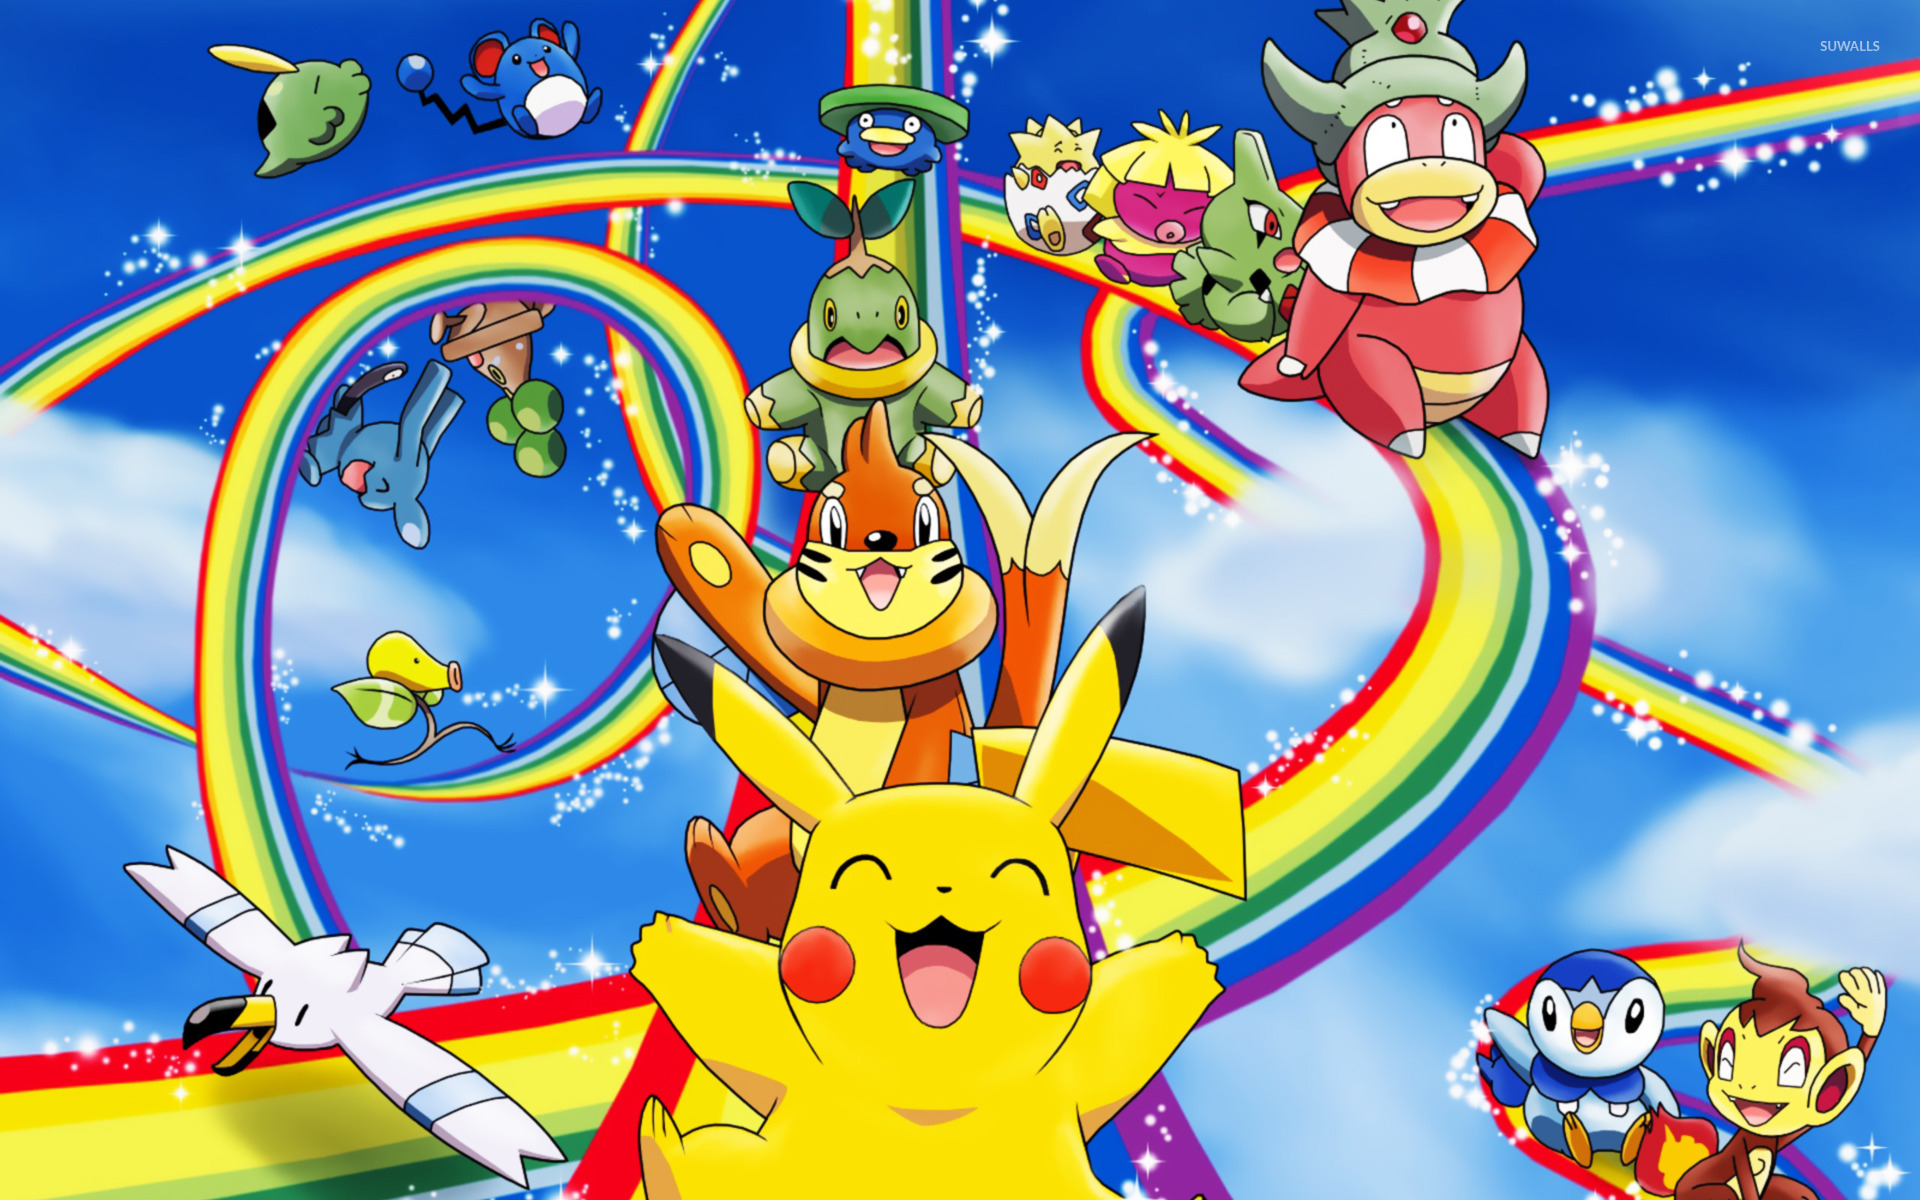 Video Game Pokémon: Diamond and Pearl HD Wallpaper